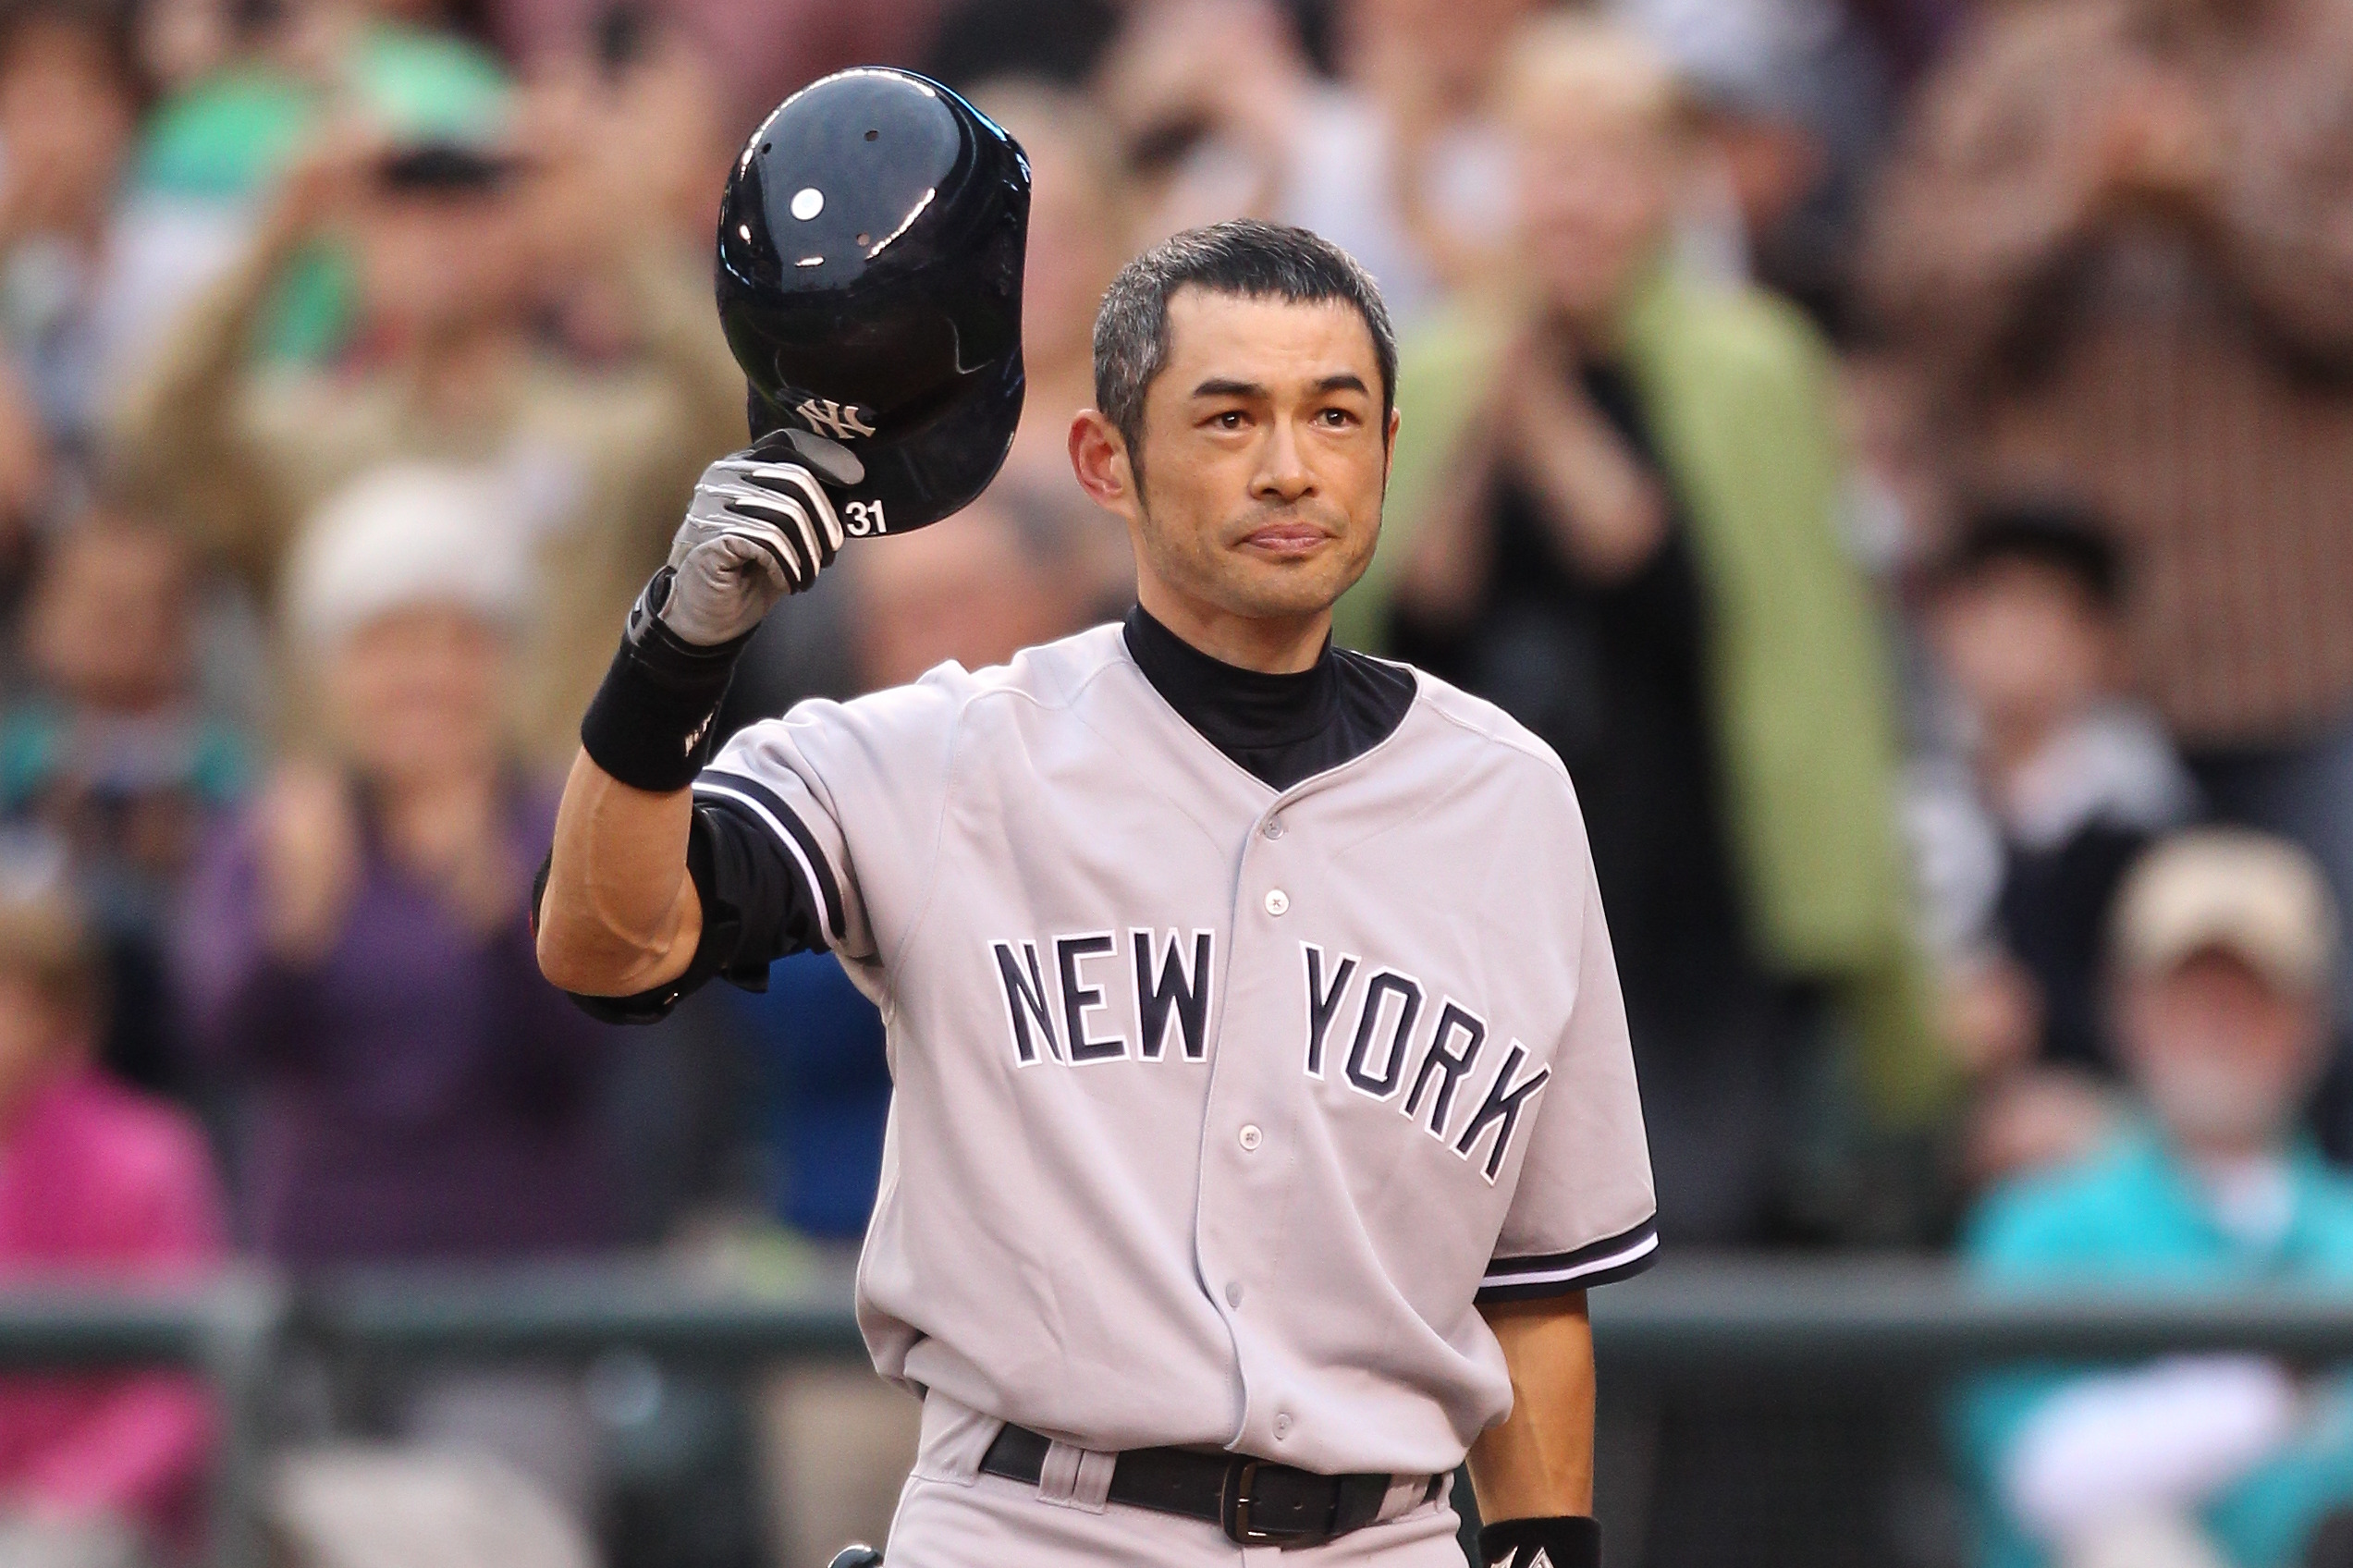 Breaking Down the Hall of Fame Legacy Ichiro Suzuki Built in